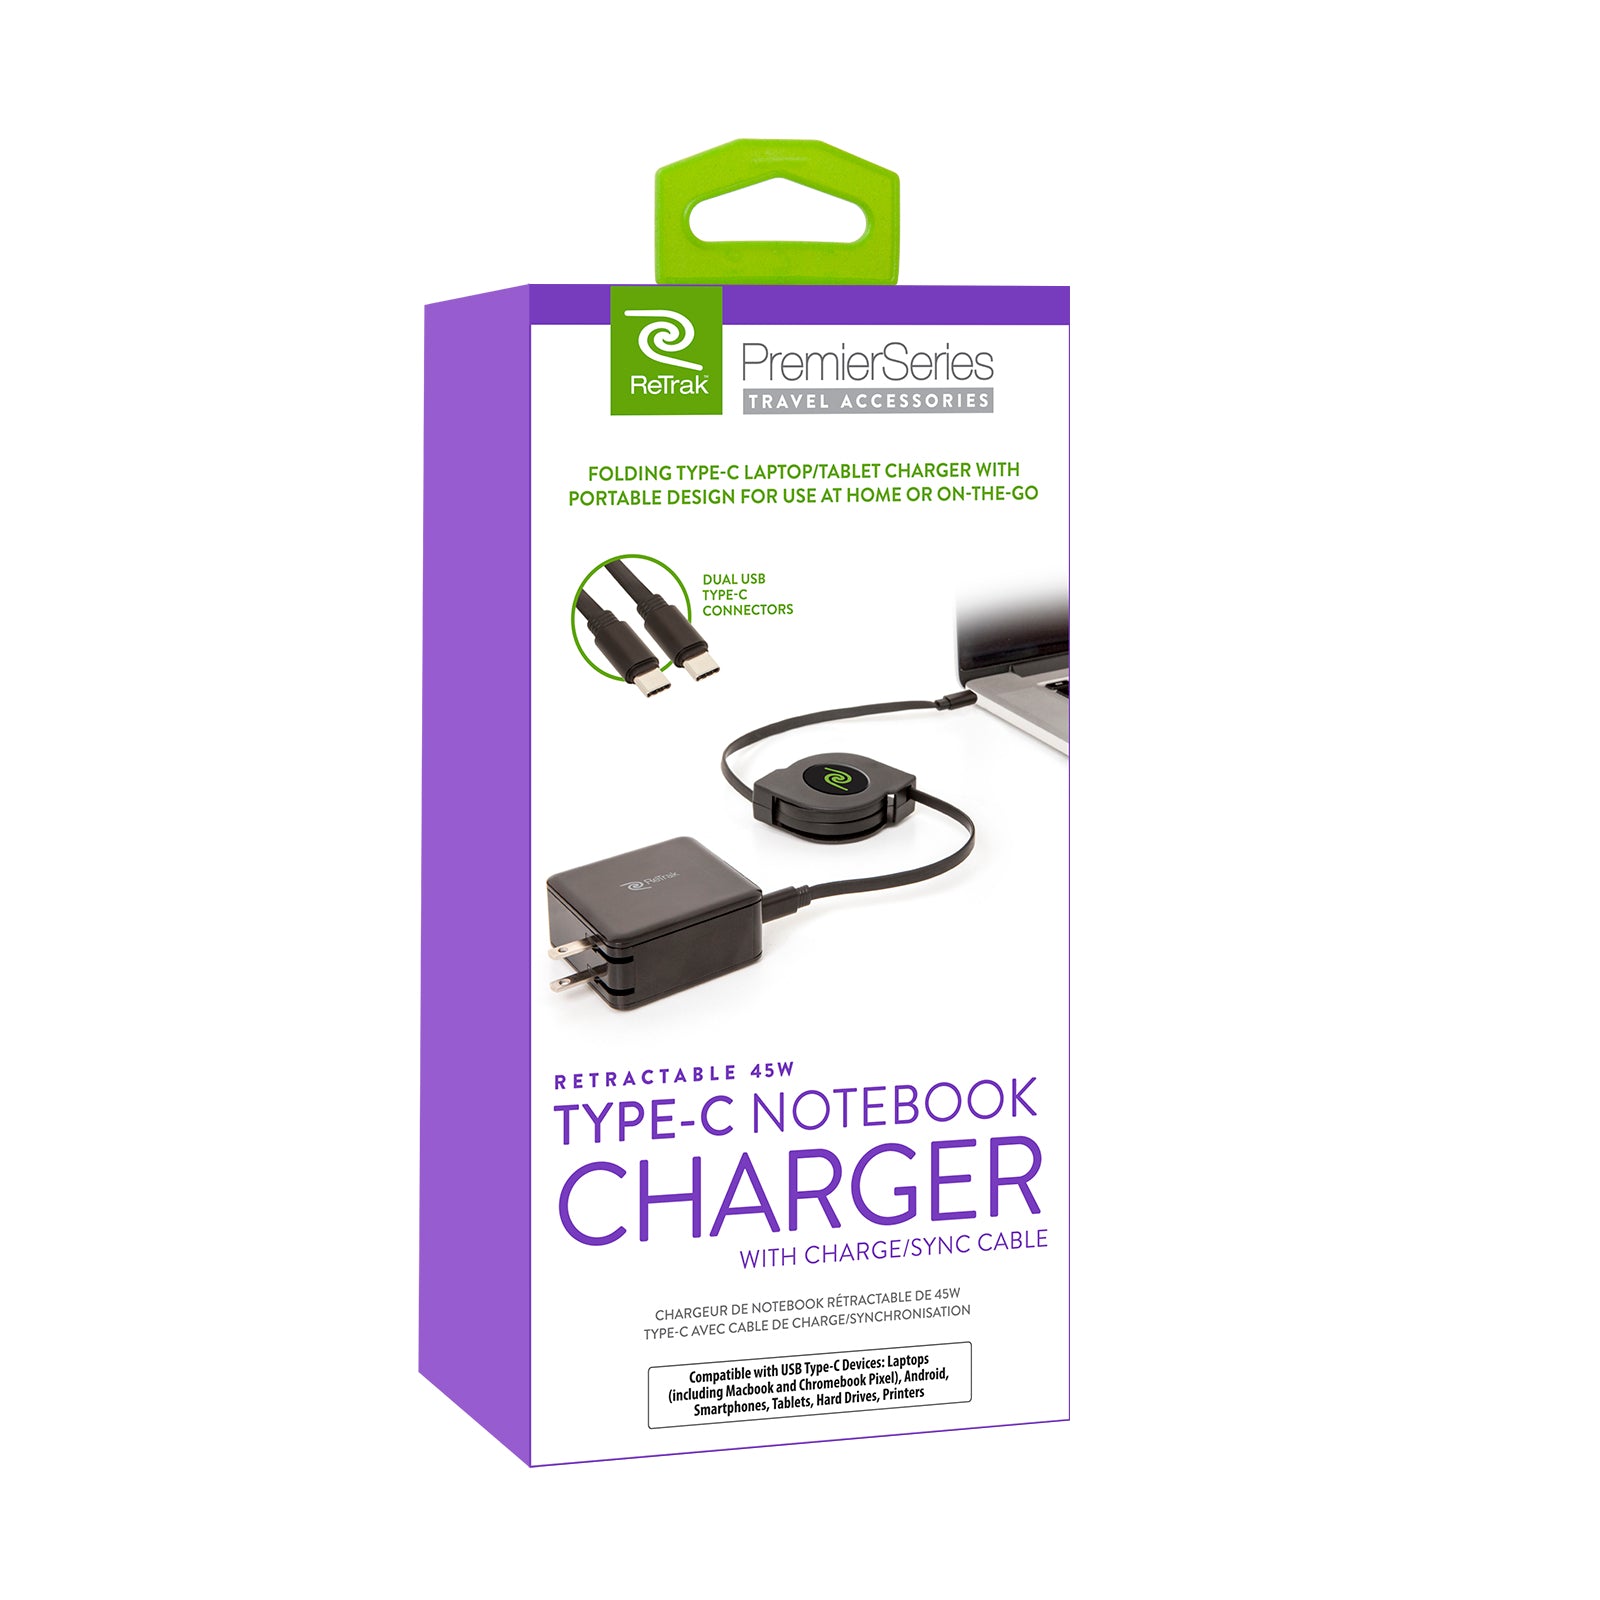 Frø Dalset godt USB-C Notebook Charger | 45W Retractable Charger Cable – ReTrak